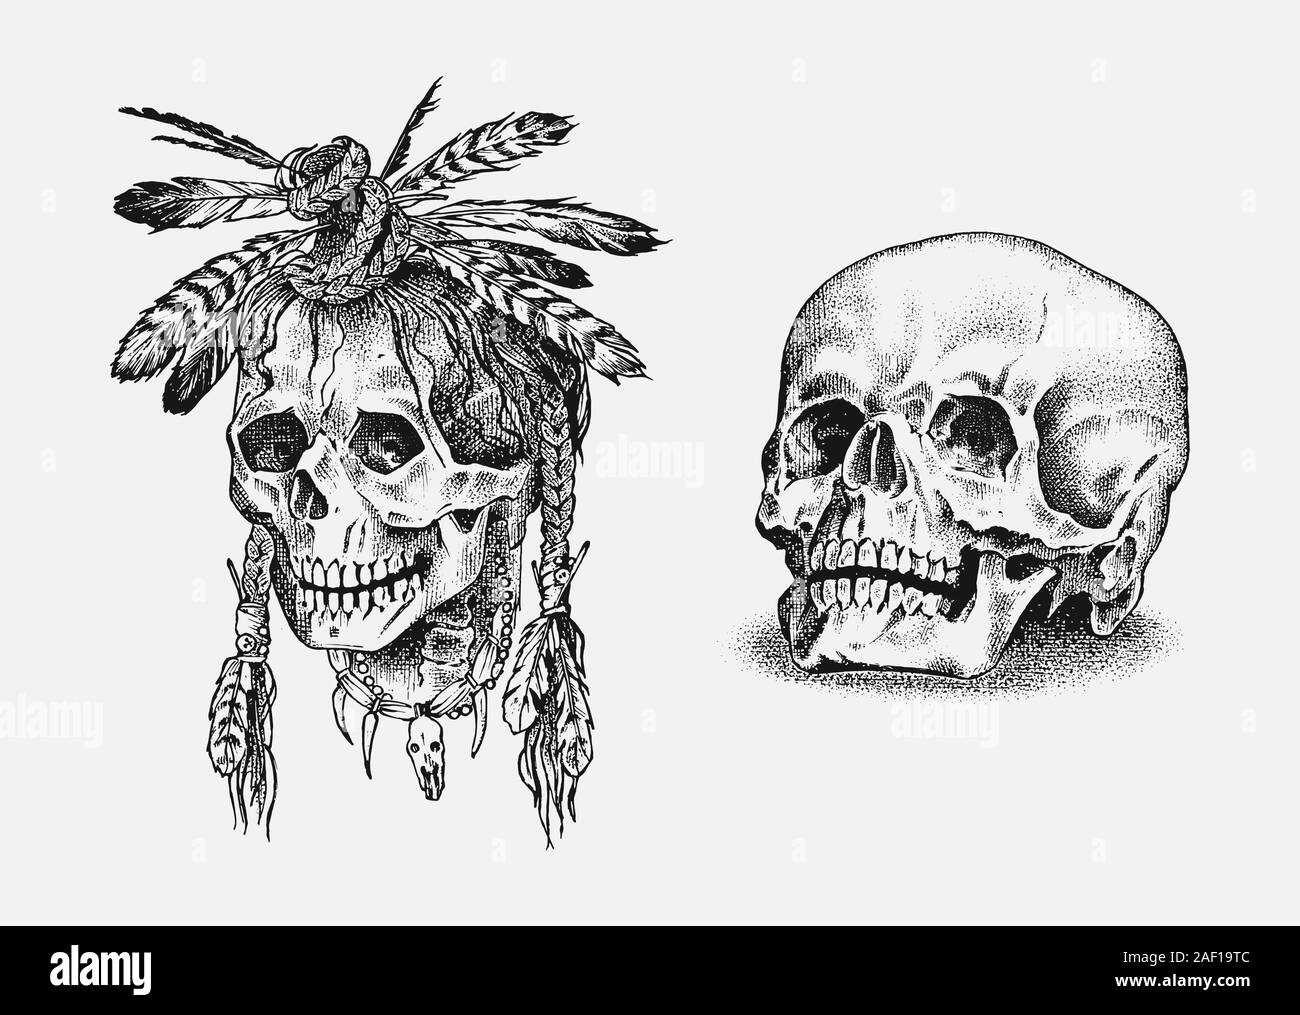 Tribal Skull Tattoo Stock Illustrations  4679 Tribal Skull Tattoo Stock  Illustrations Vectors  Clipart  Dreamstime